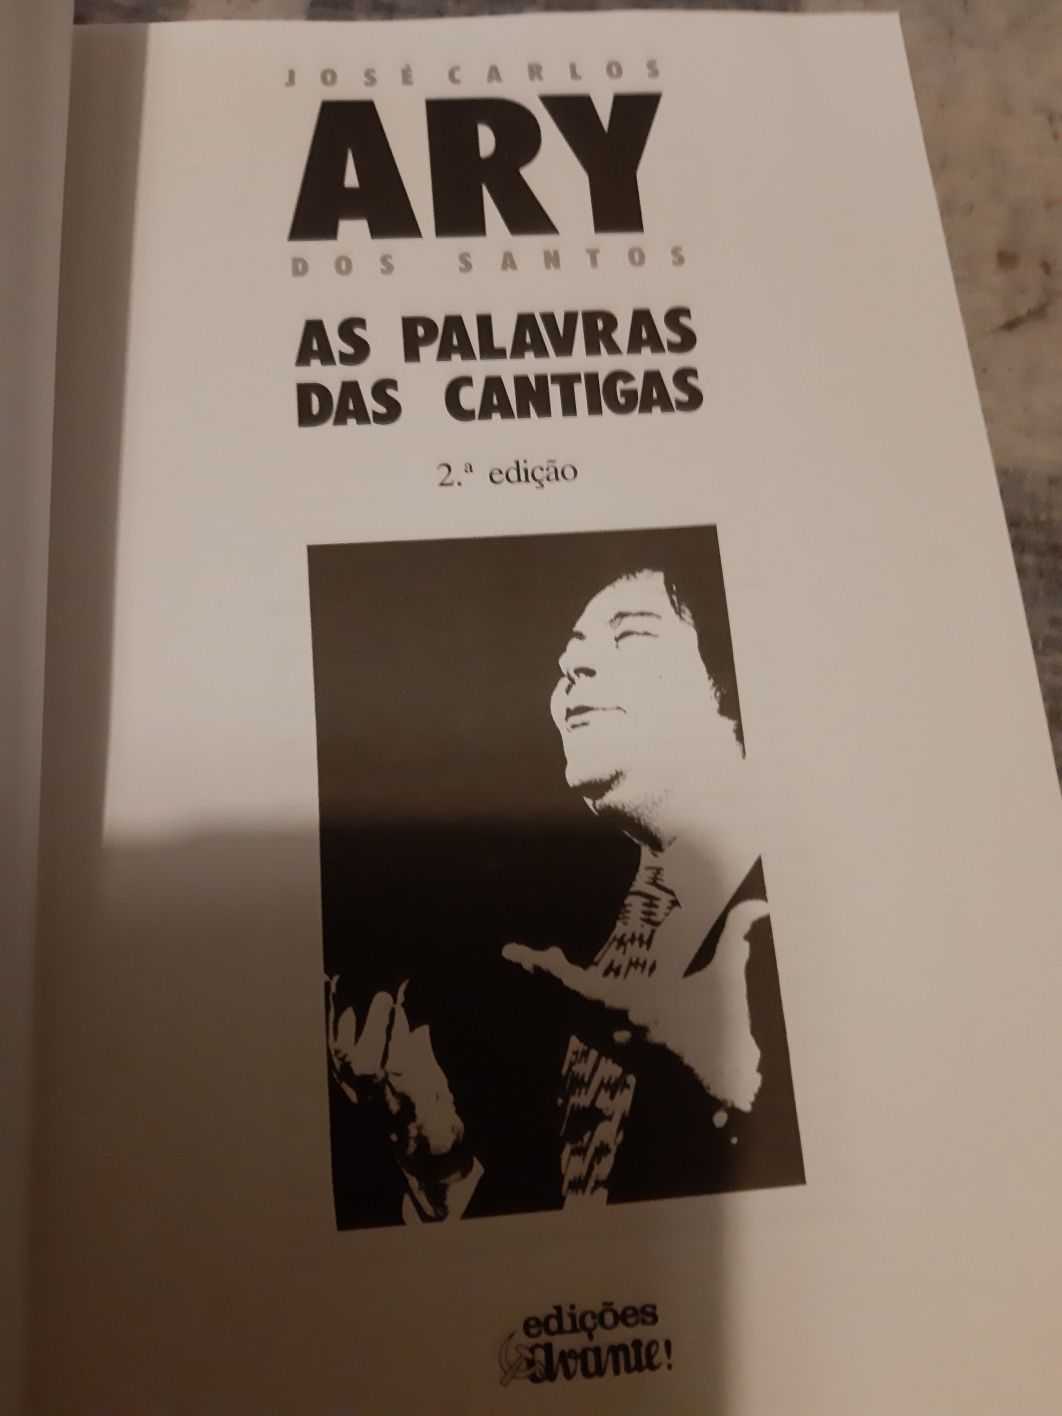 As Palavras das Cantigas - José Carlos Ary dos Santos